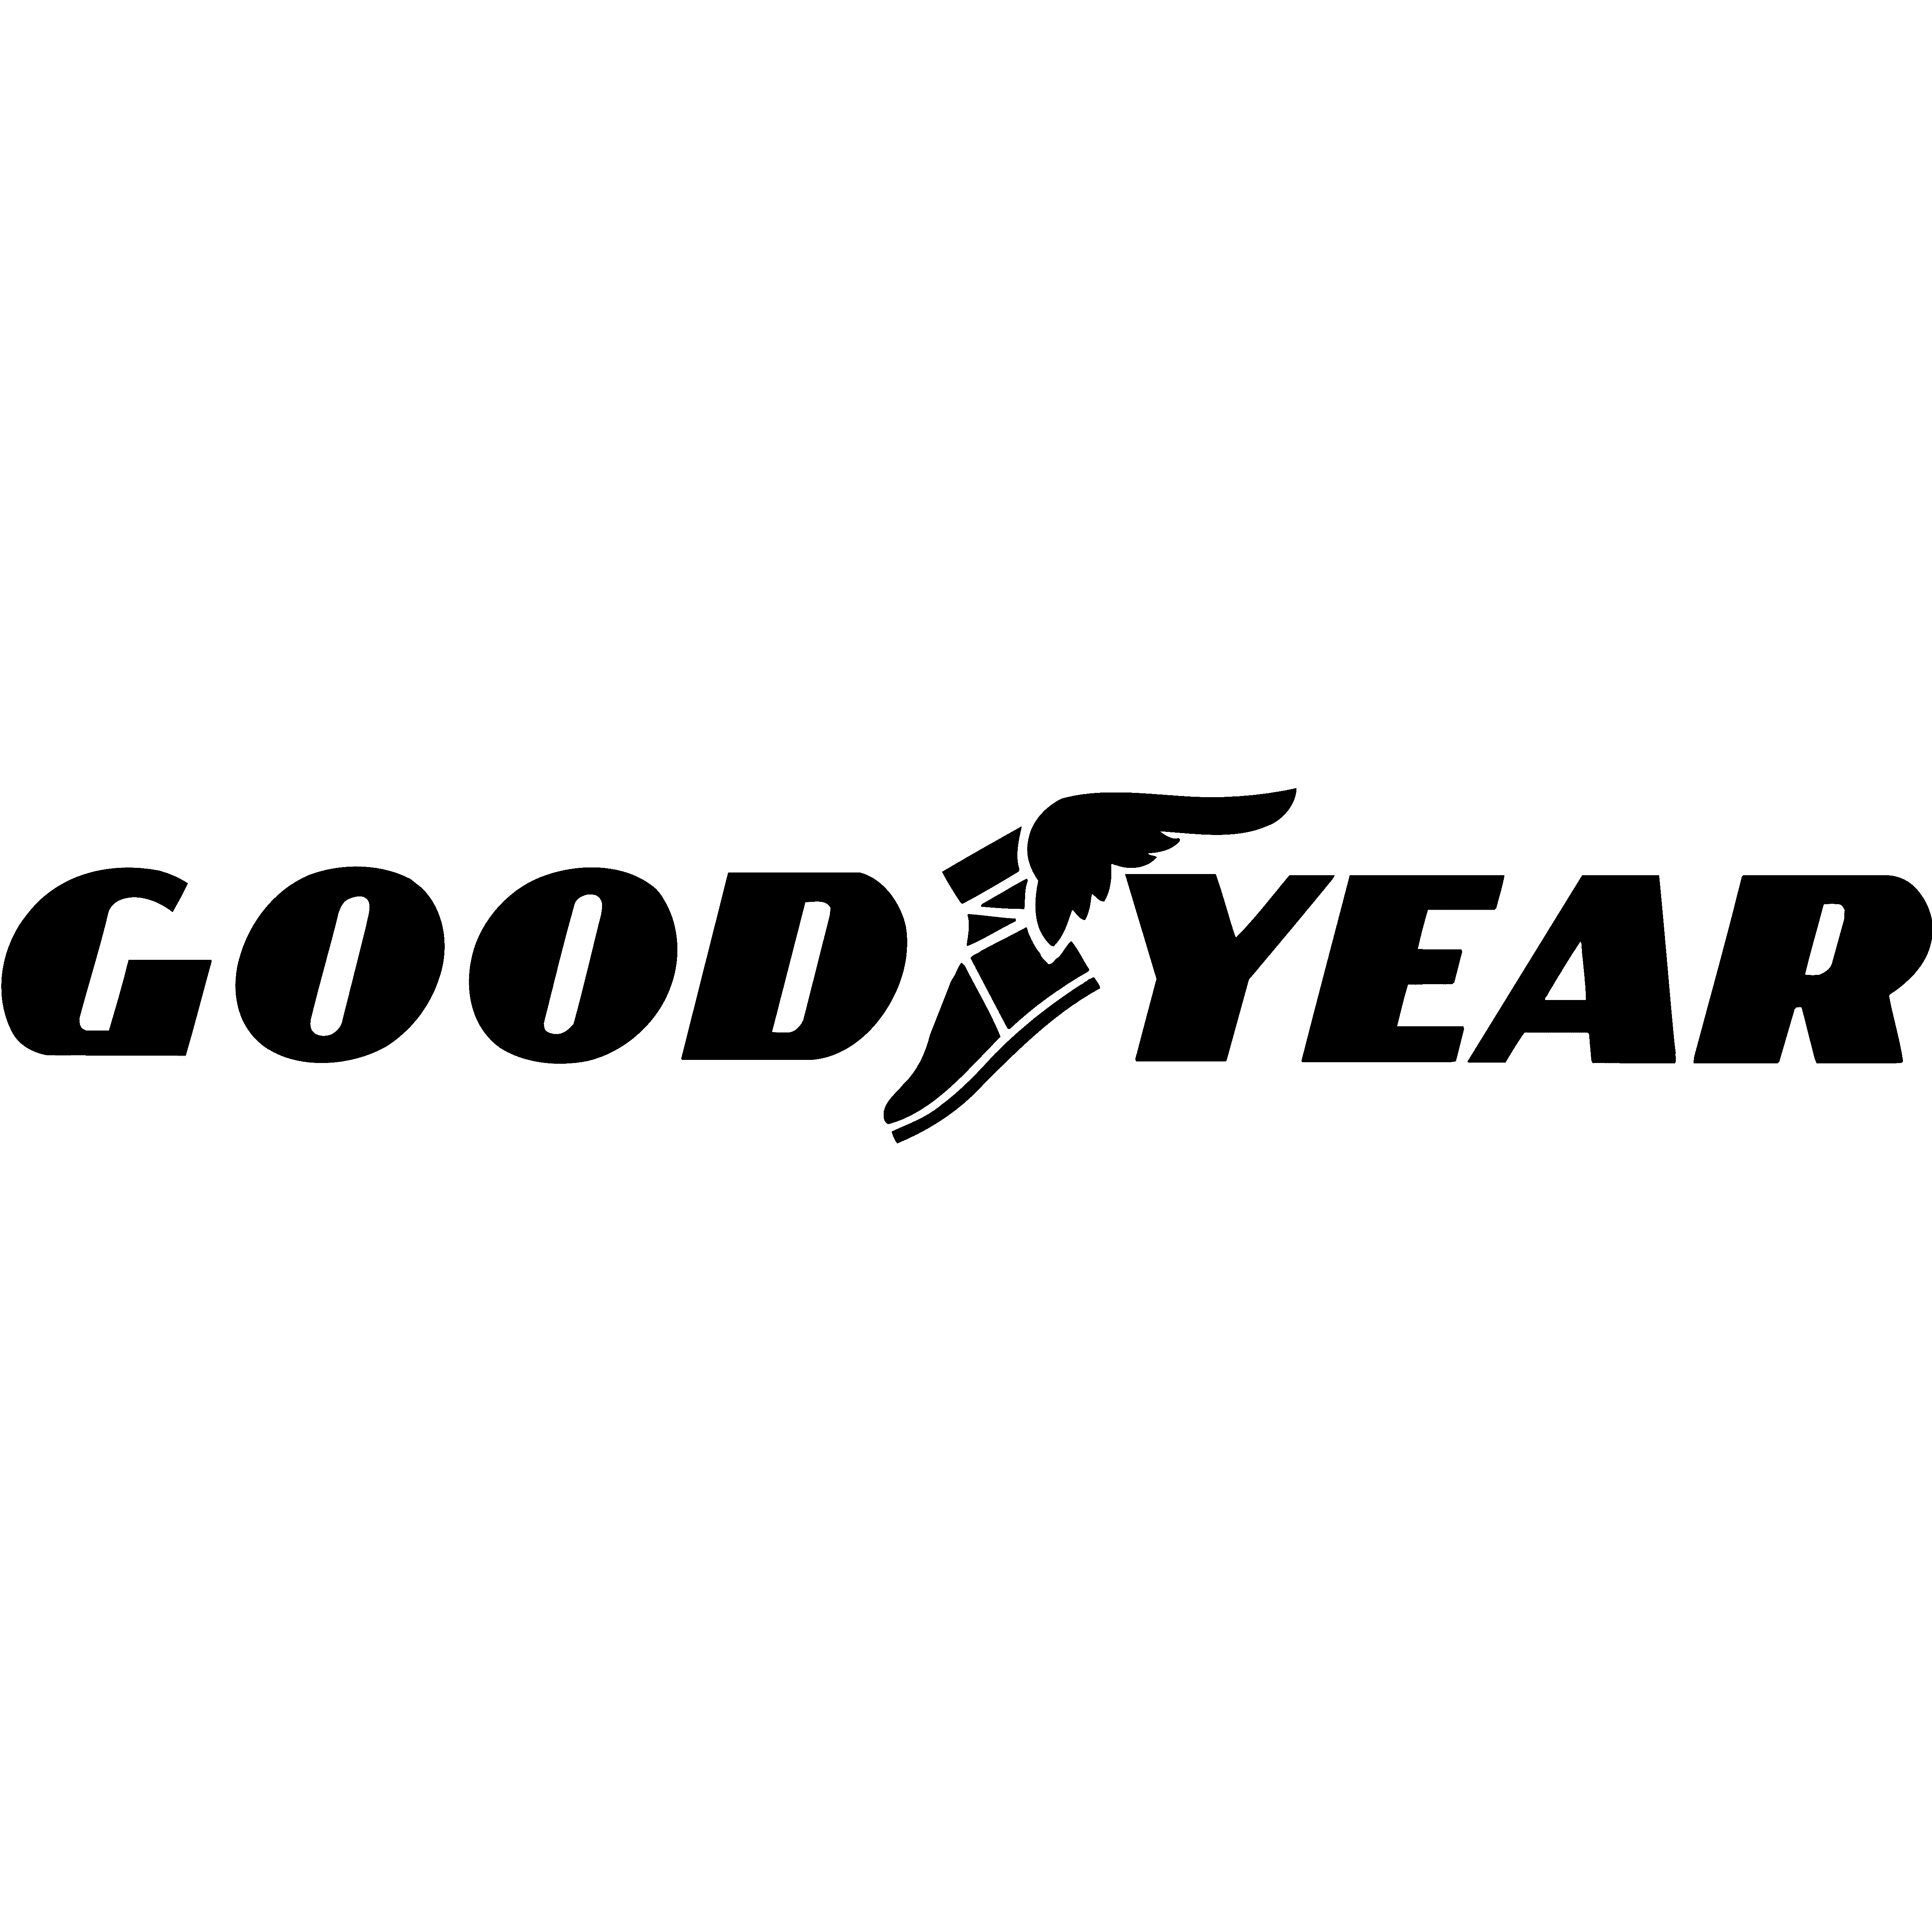 Goodyear-Logo